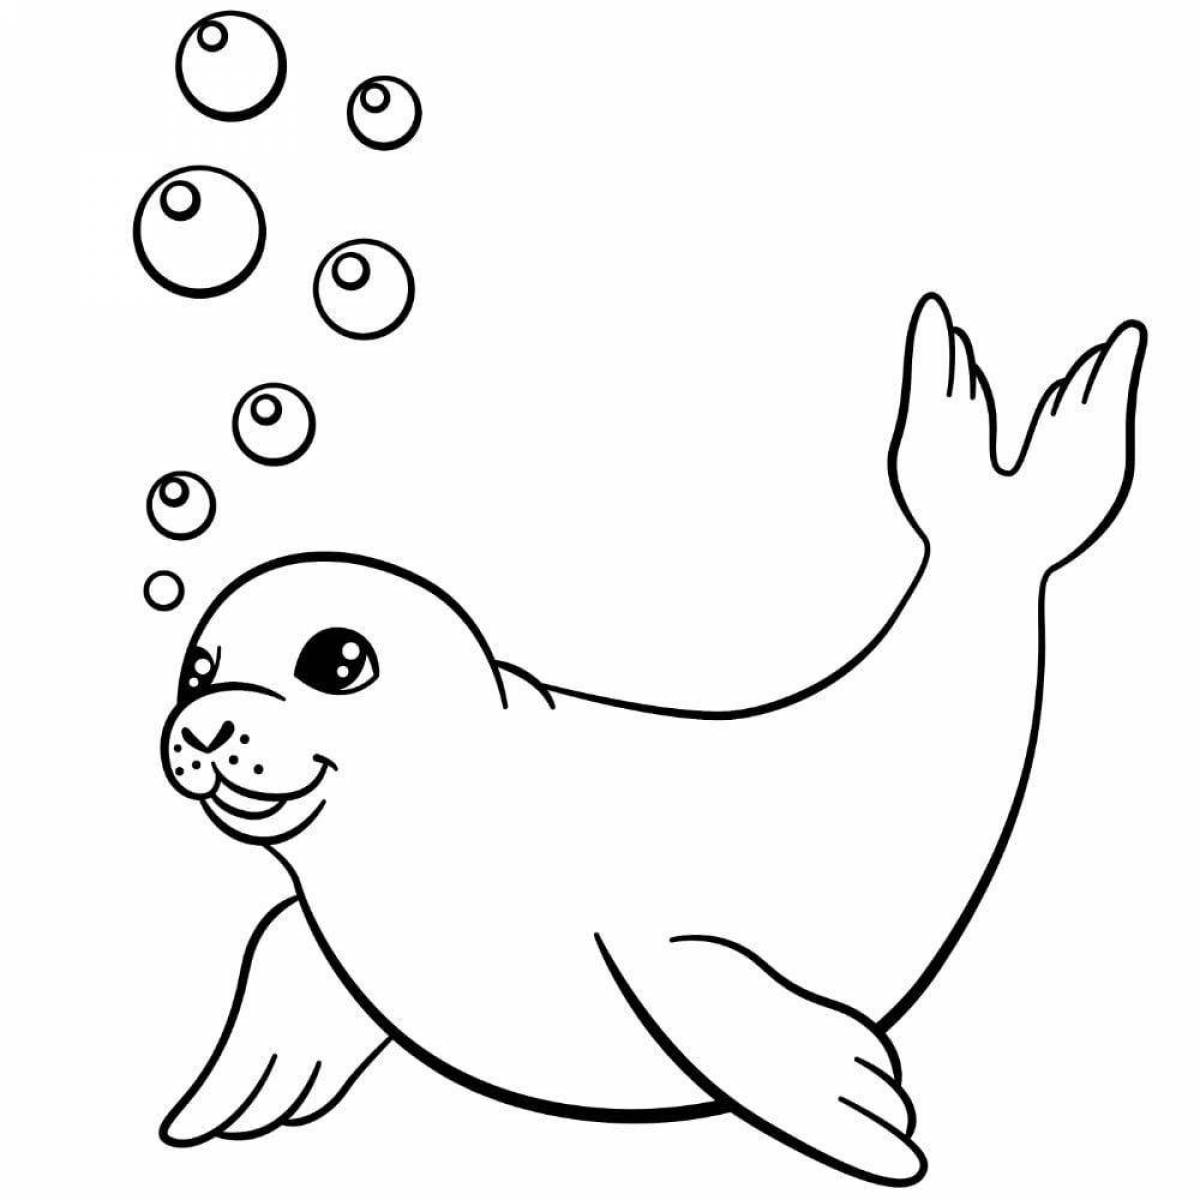 Delightful Baikal seal coloring book for kids